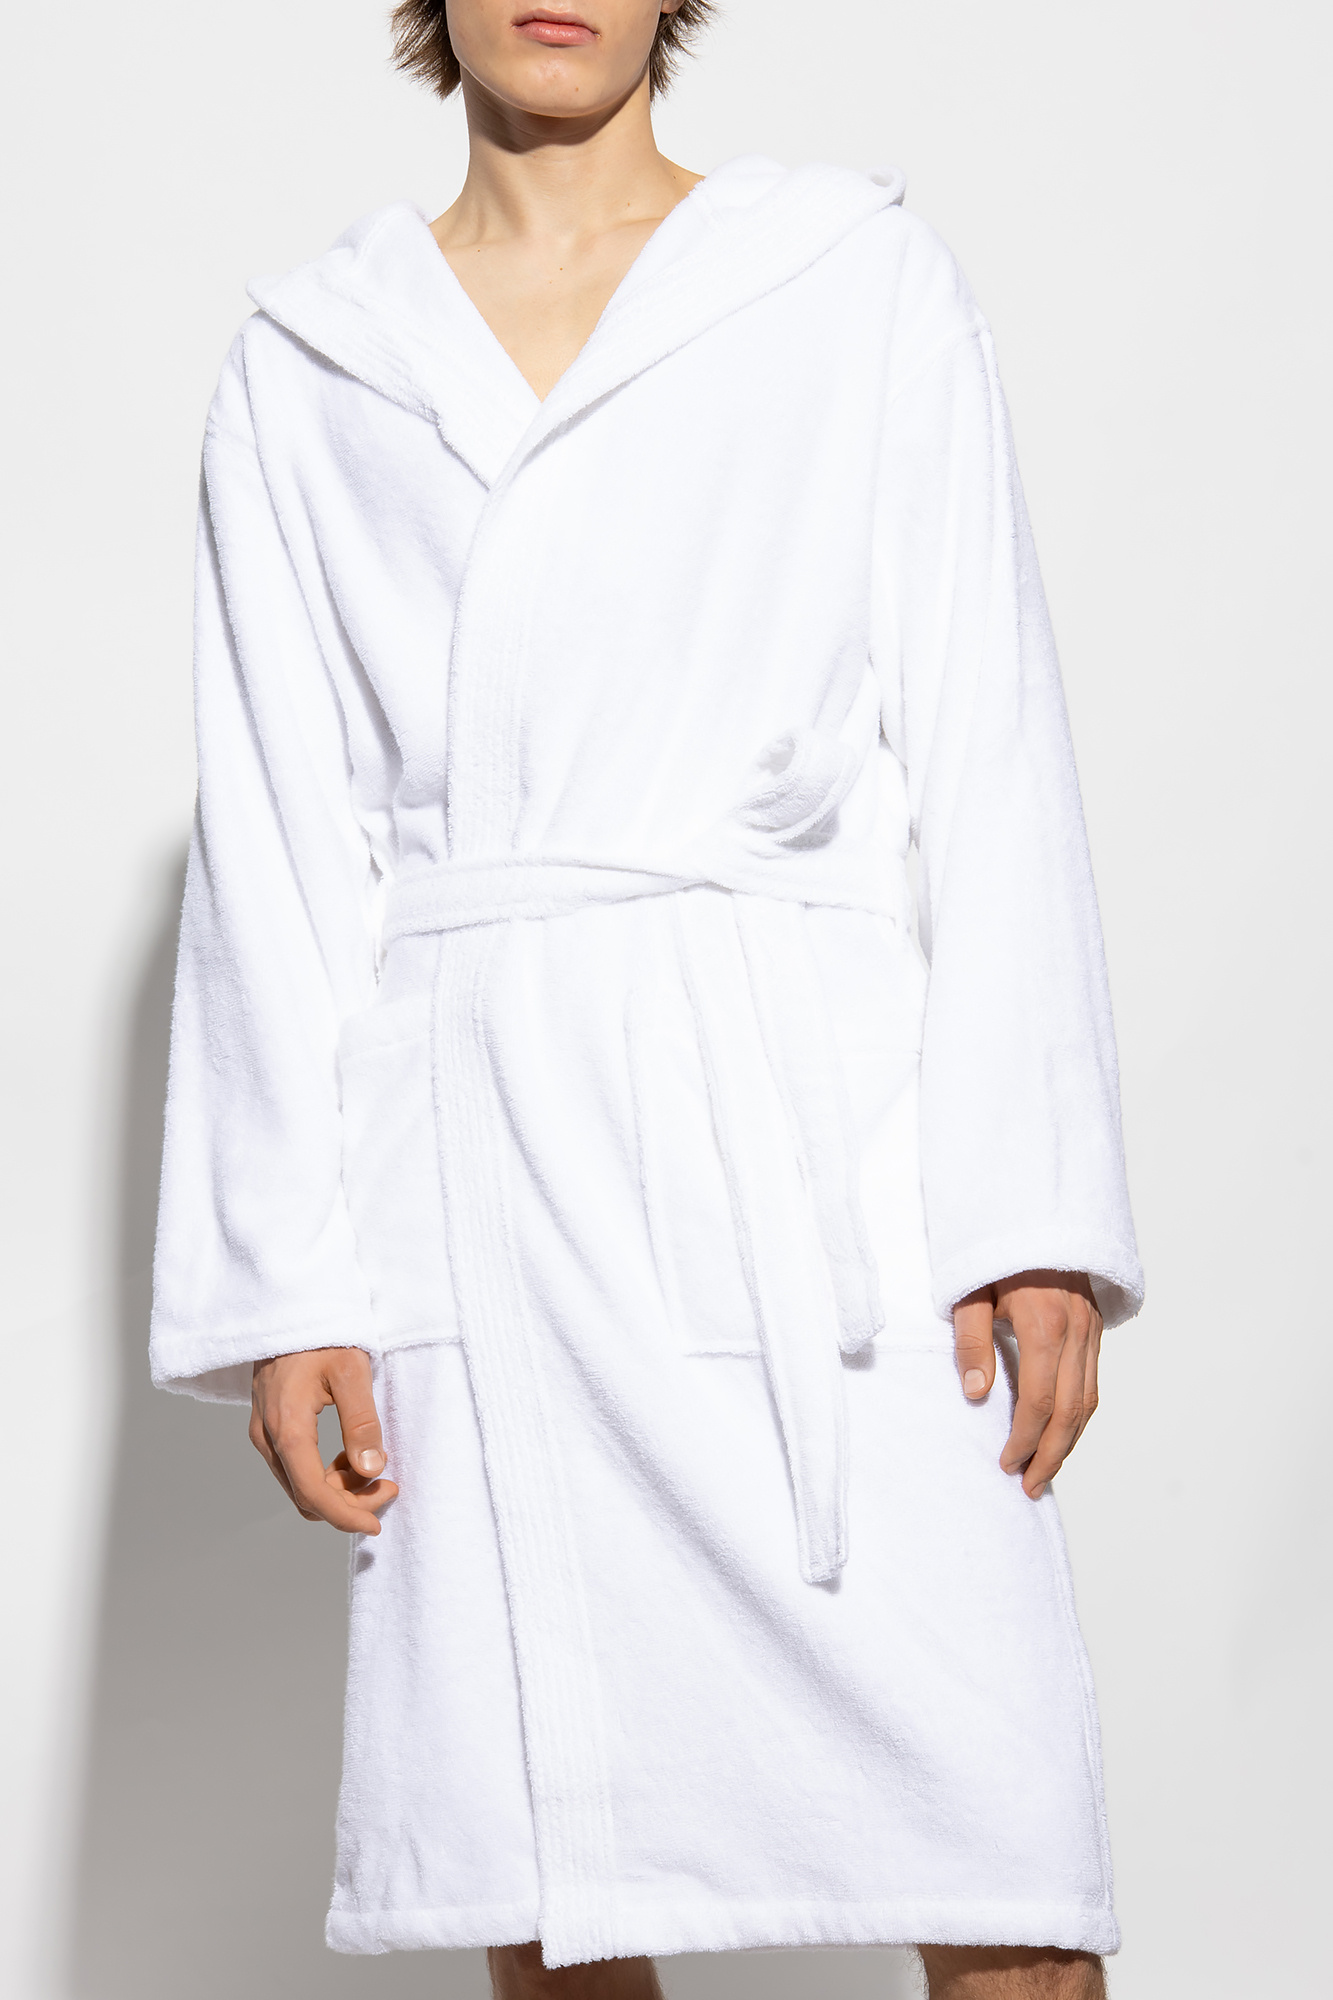 Emporio Slim armani ‘Resort’ collection bathrobe